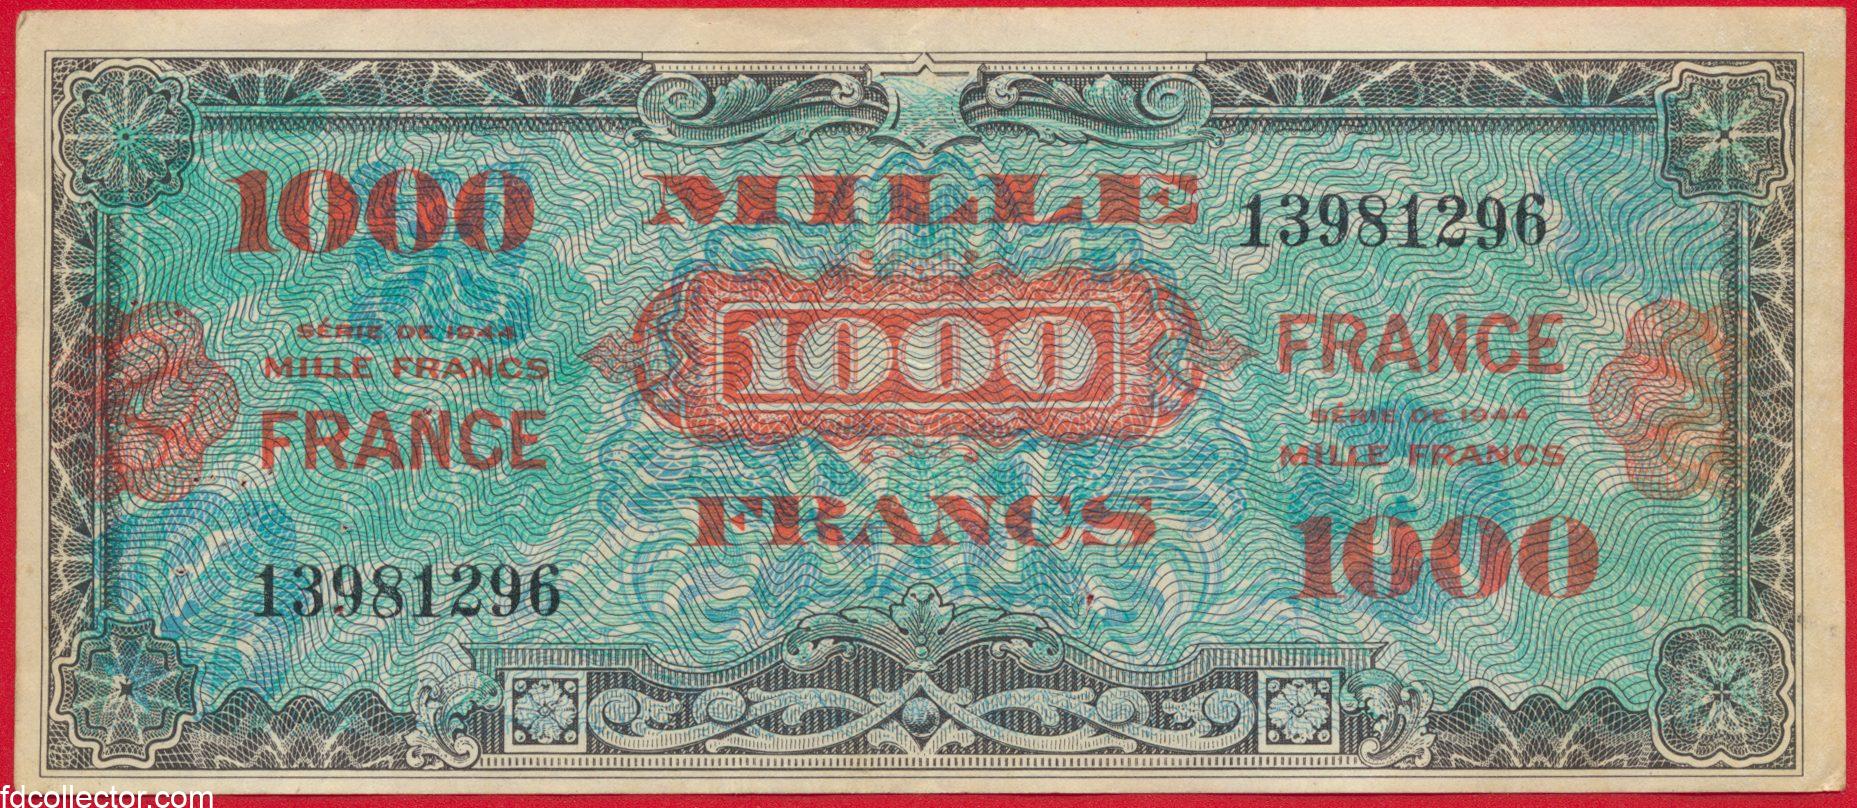 1000-impression-americaine-france-1296